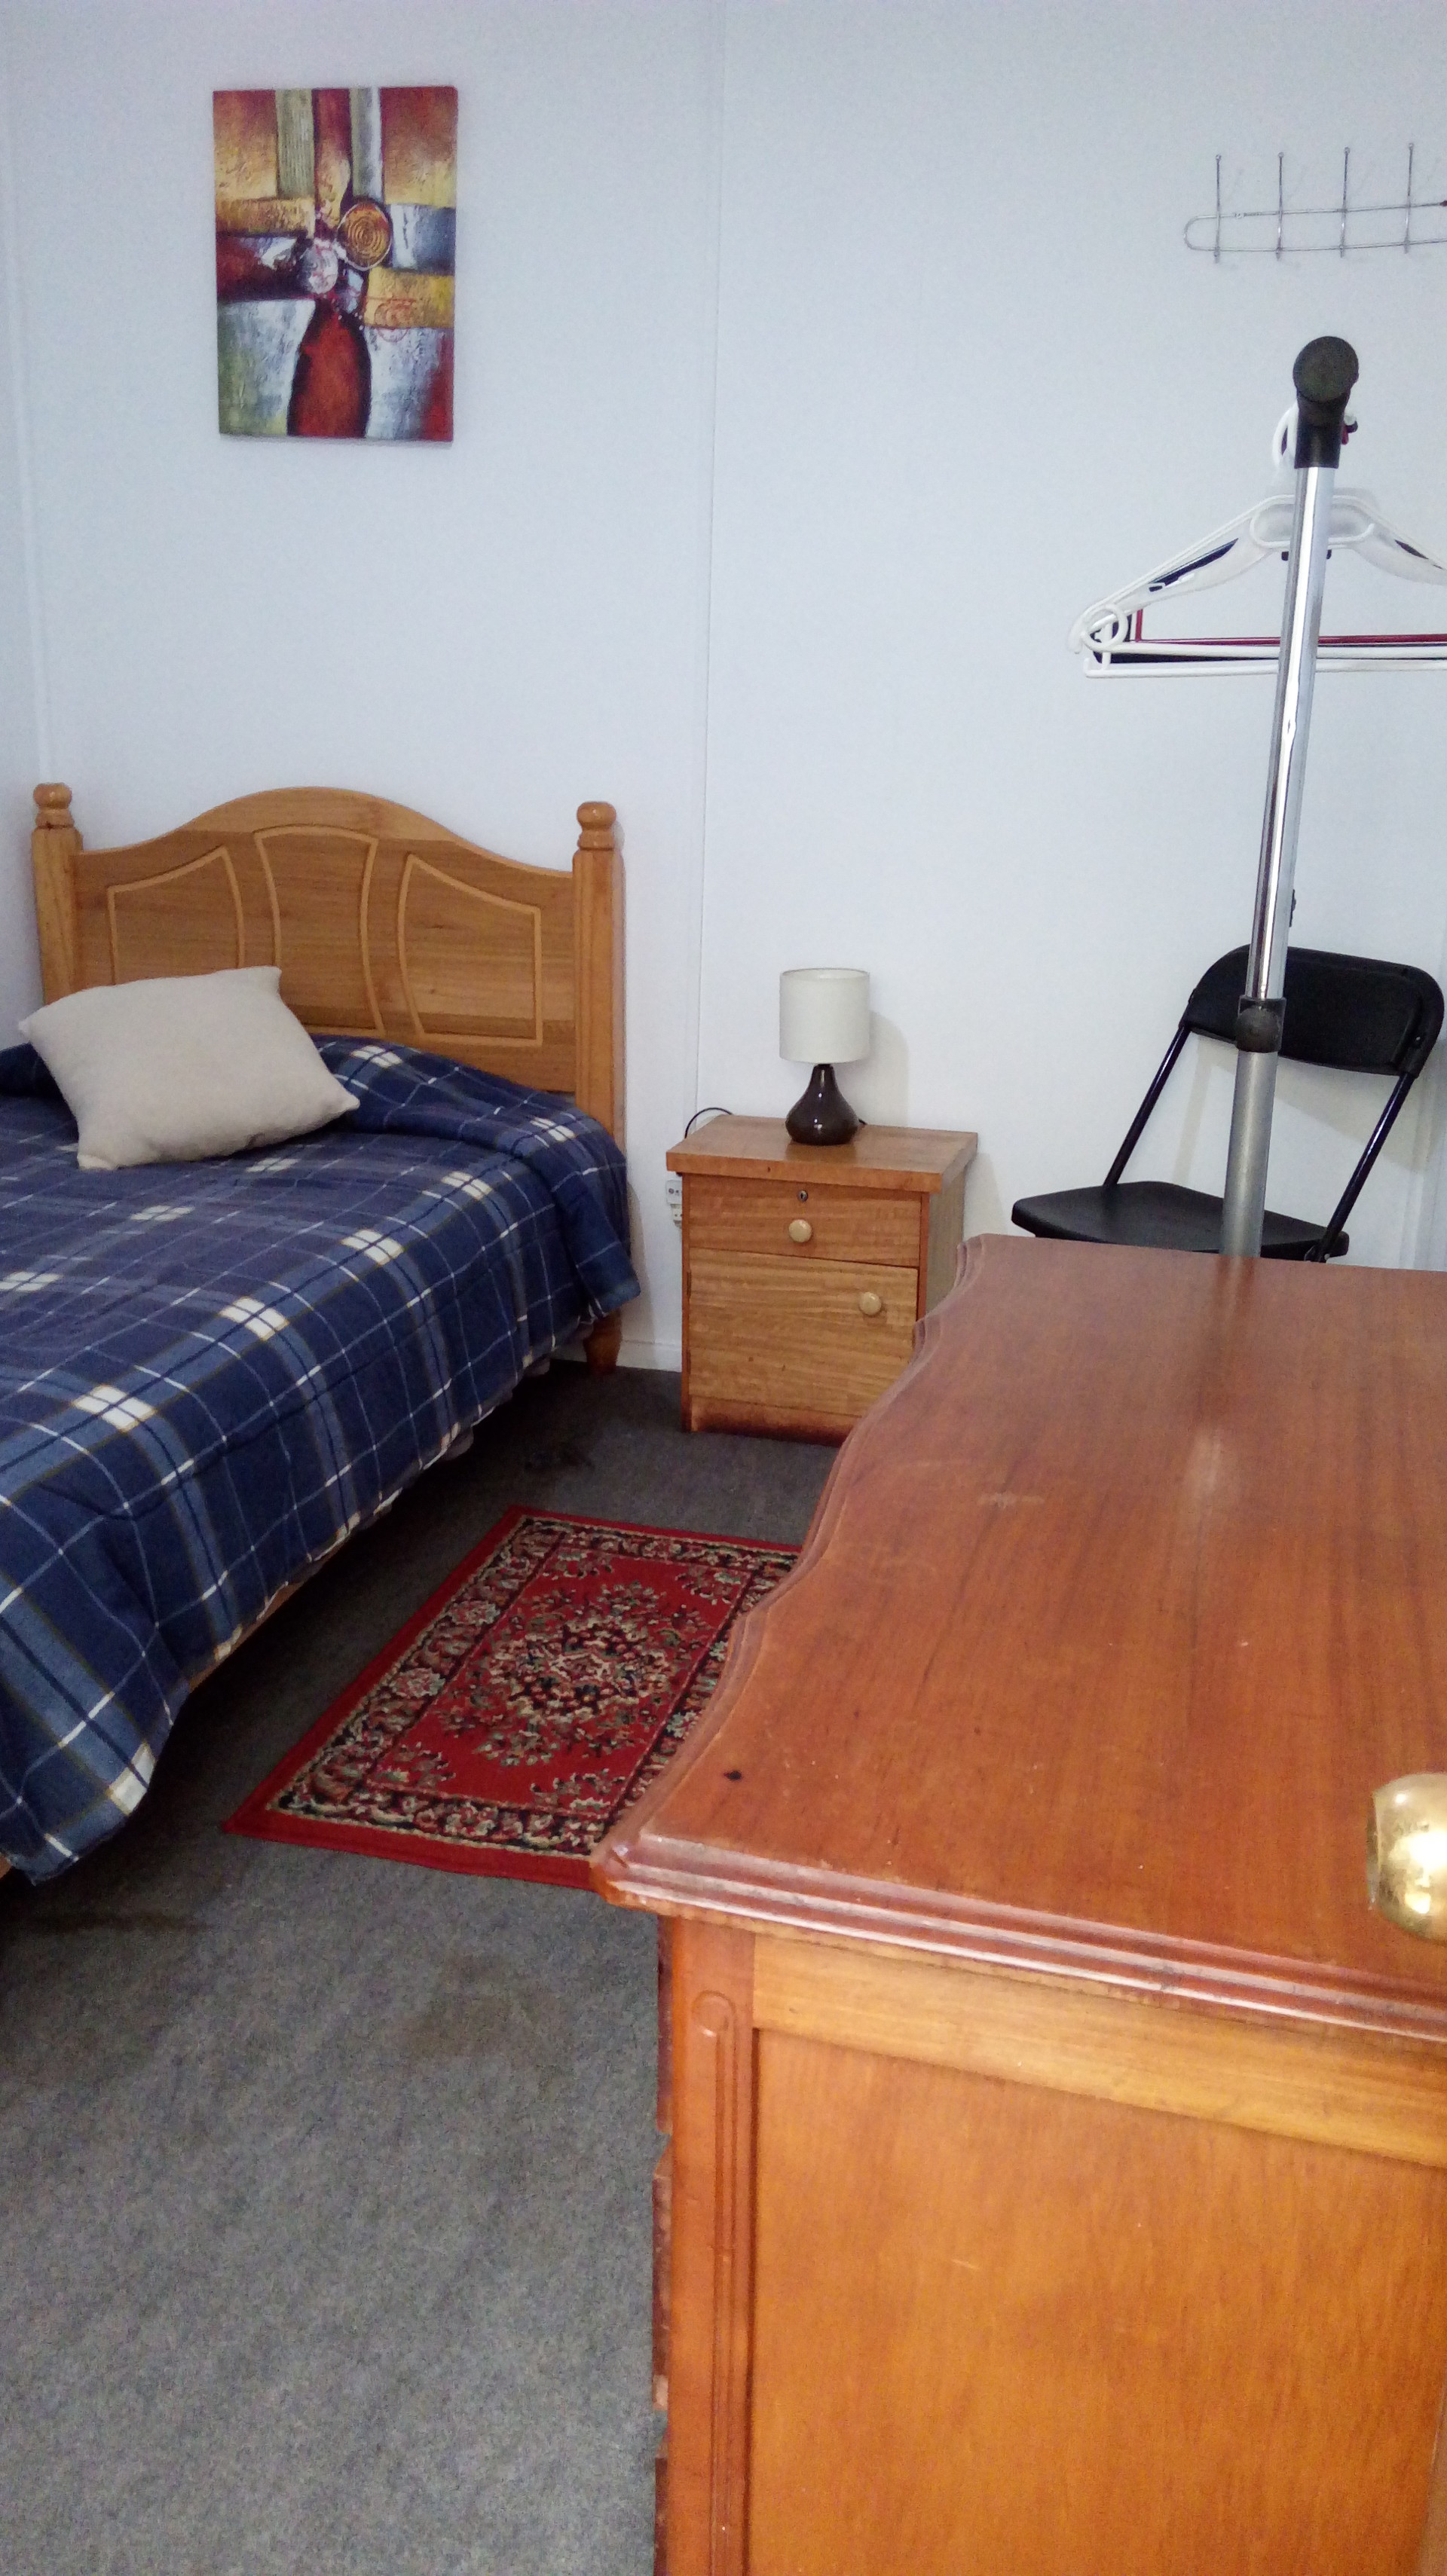 Room For Rent In 14 Bedroom Apartment In Vina Del Mar